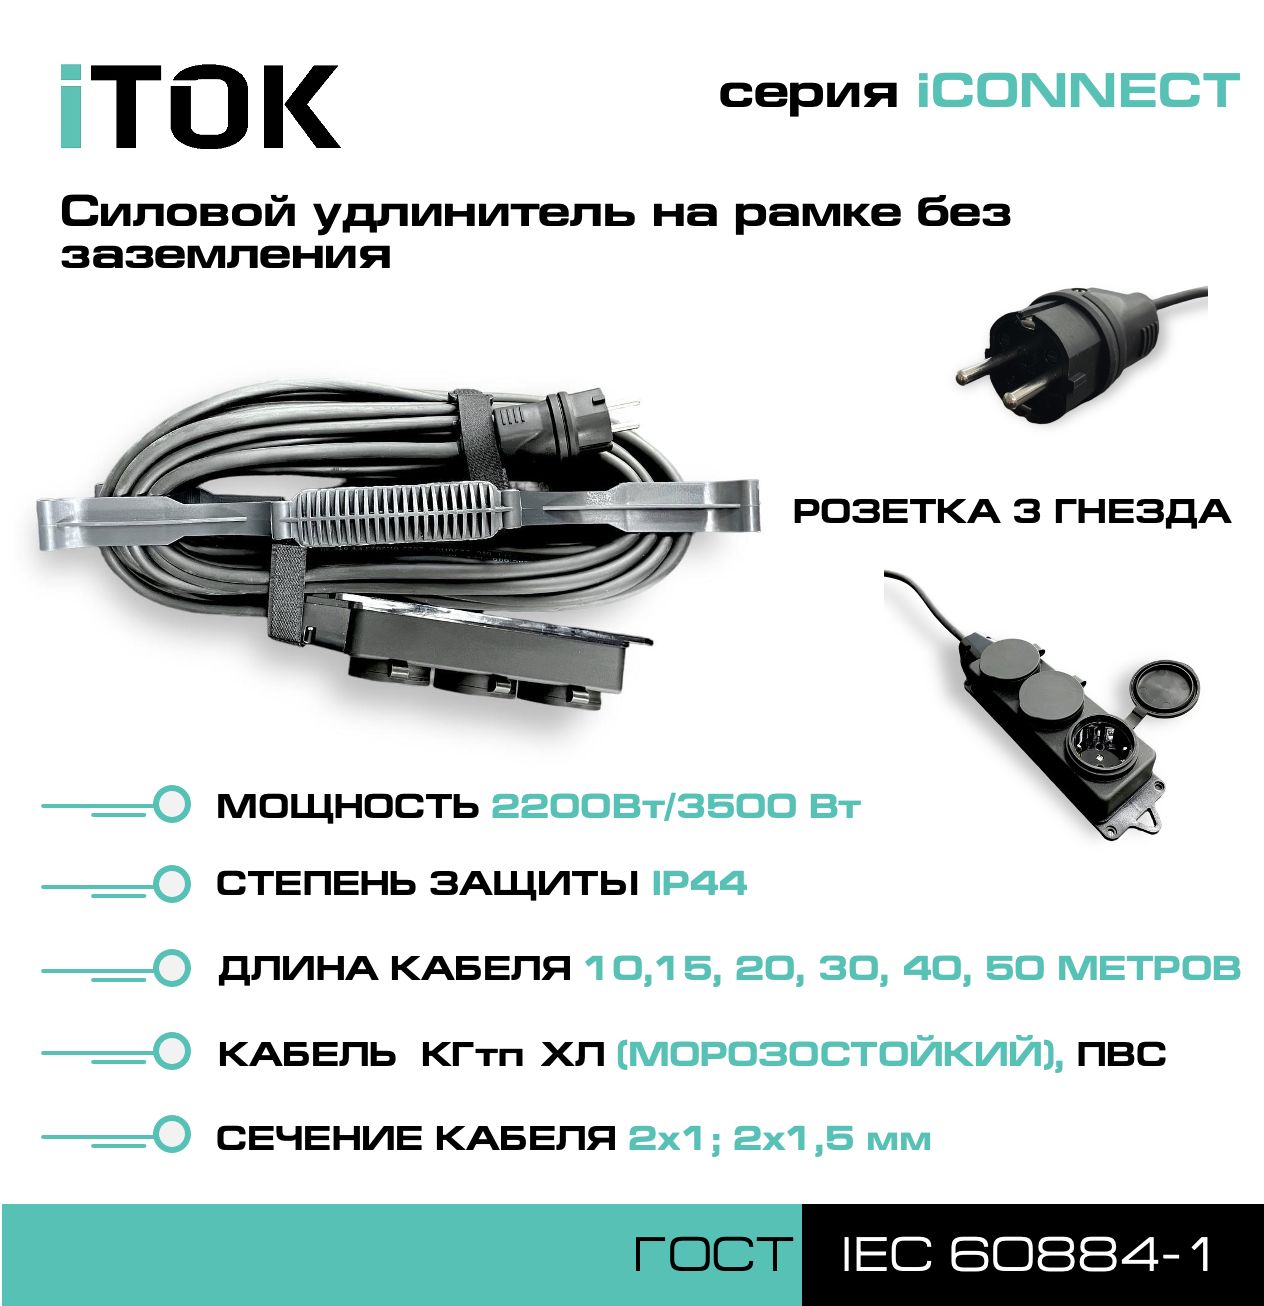 Удлинитель на рамке без земли серии iTOK iCONNECT ПВС 2х1,5 мм 3 гнезда IP44 10 м